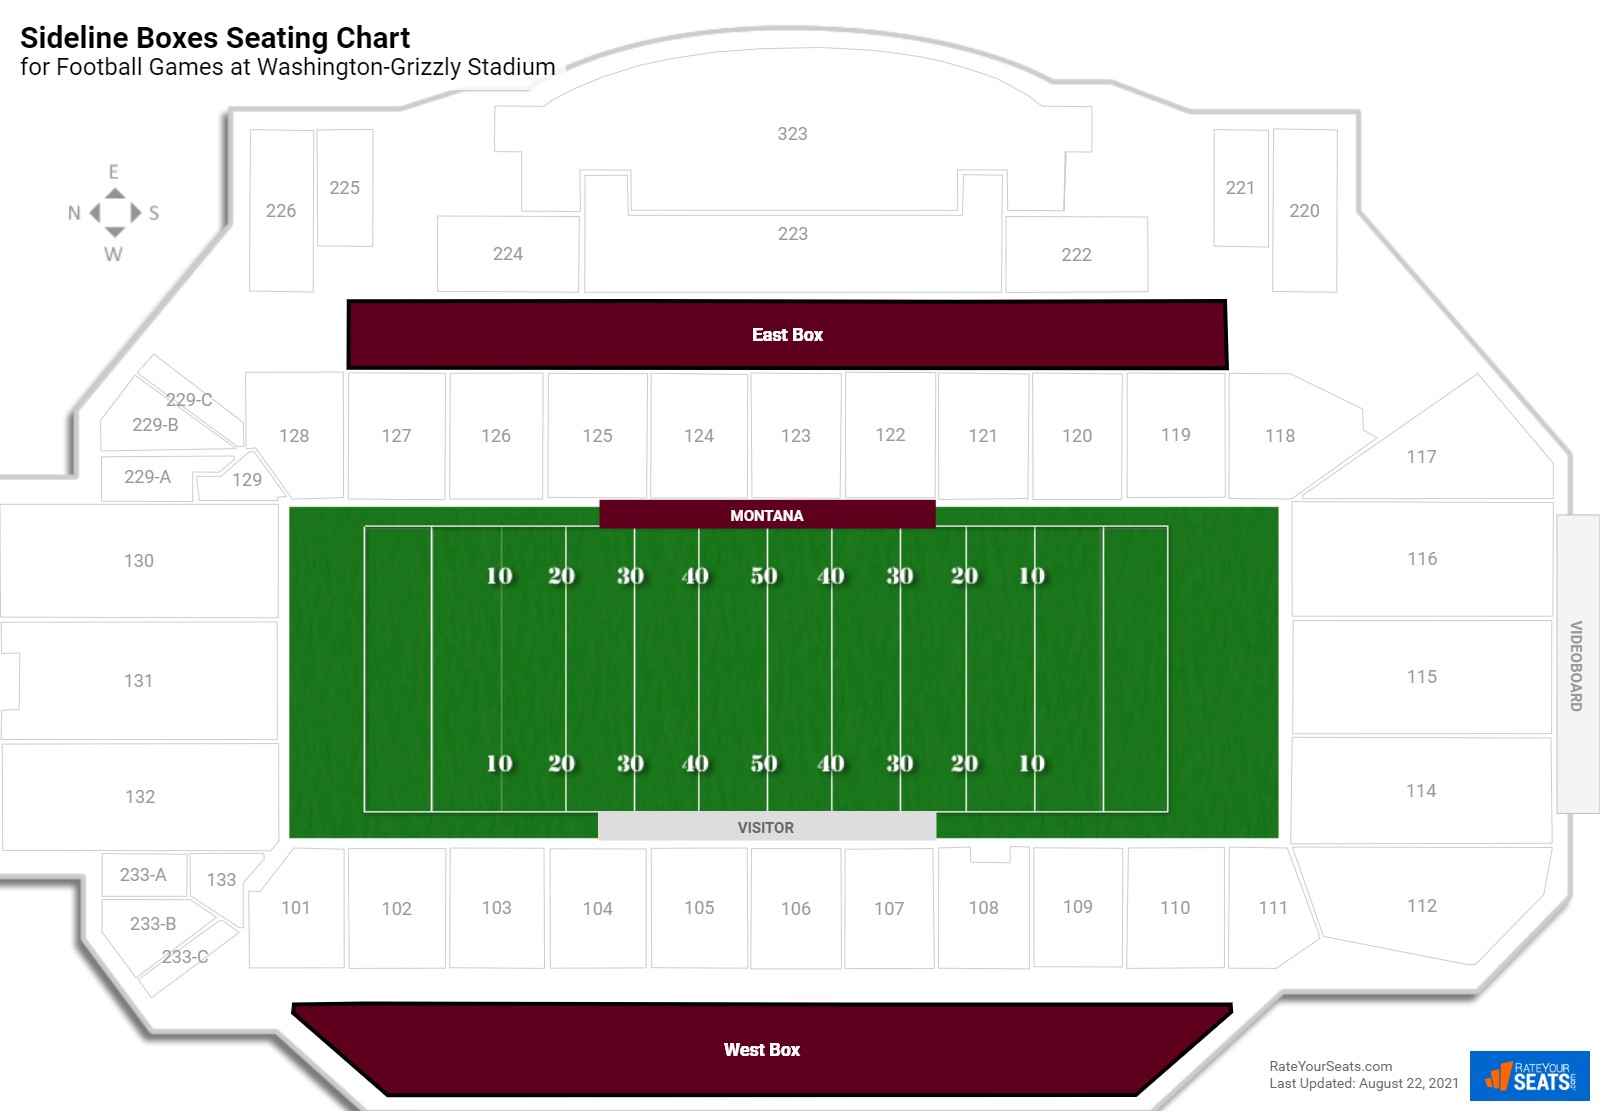 Football Sideline Boxes Seating Chart at Washington-Grizzly Stadium